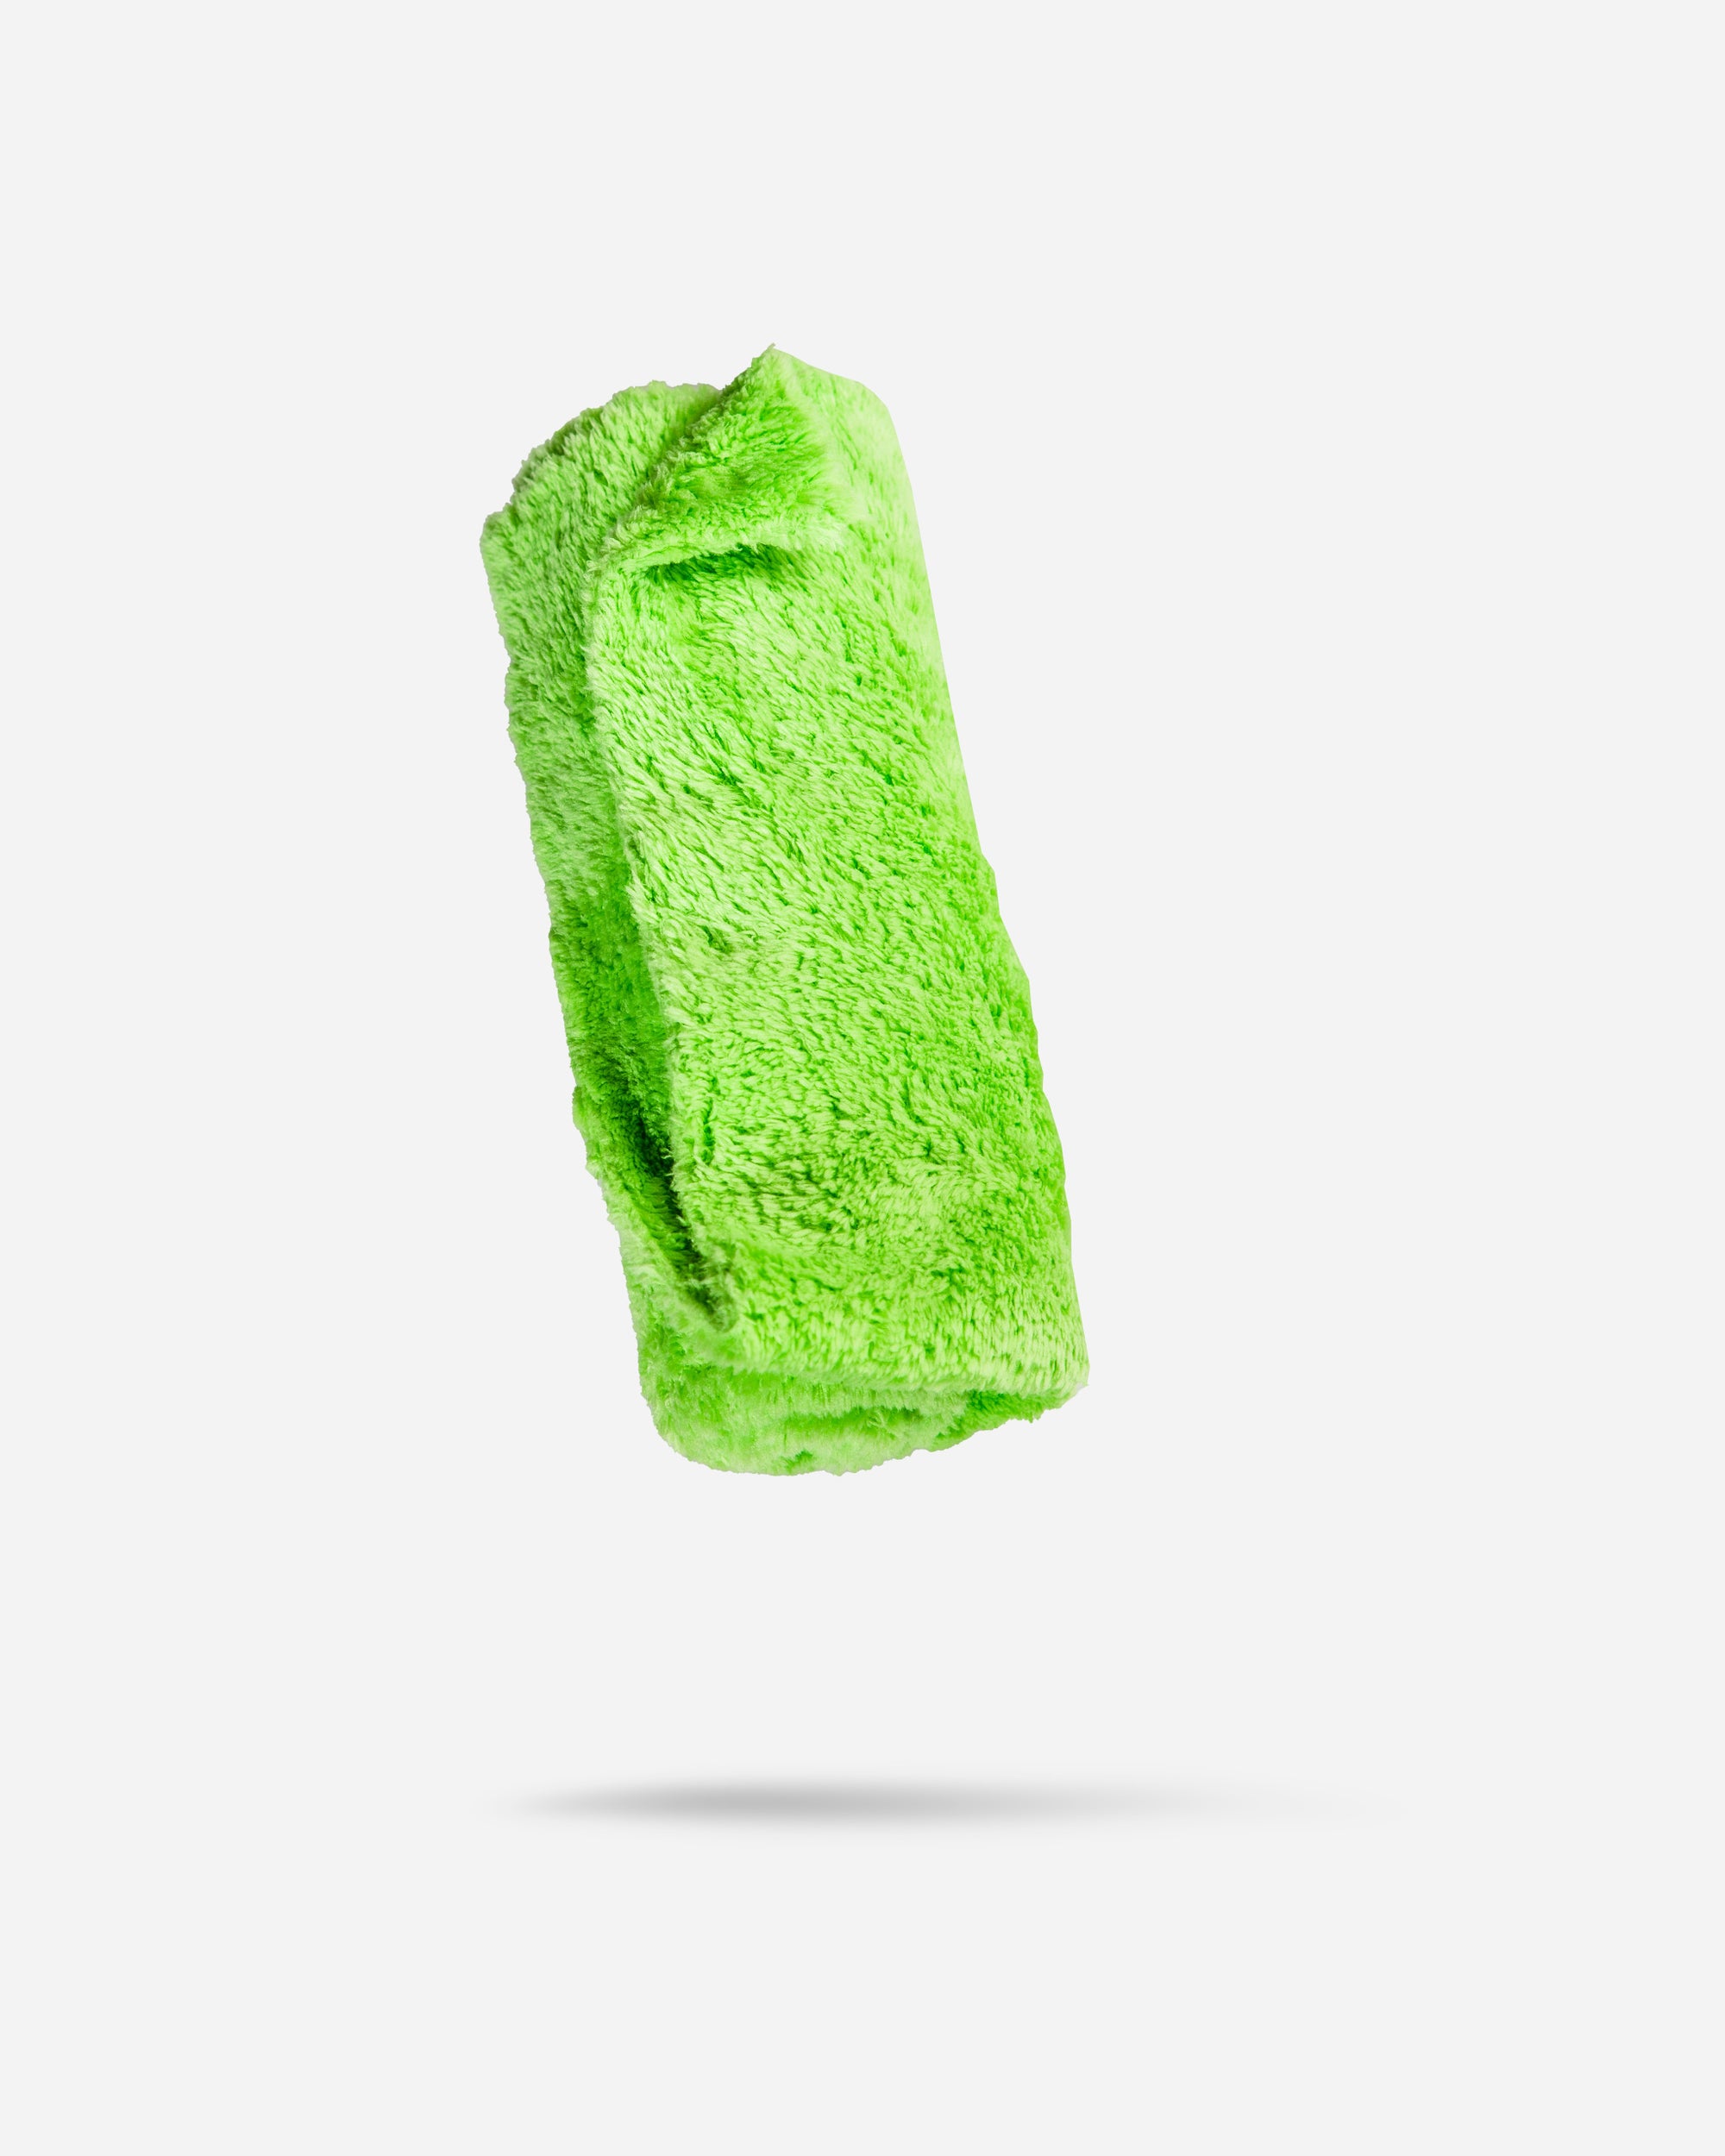 Adam's Borderless Green Lite Plush Towel